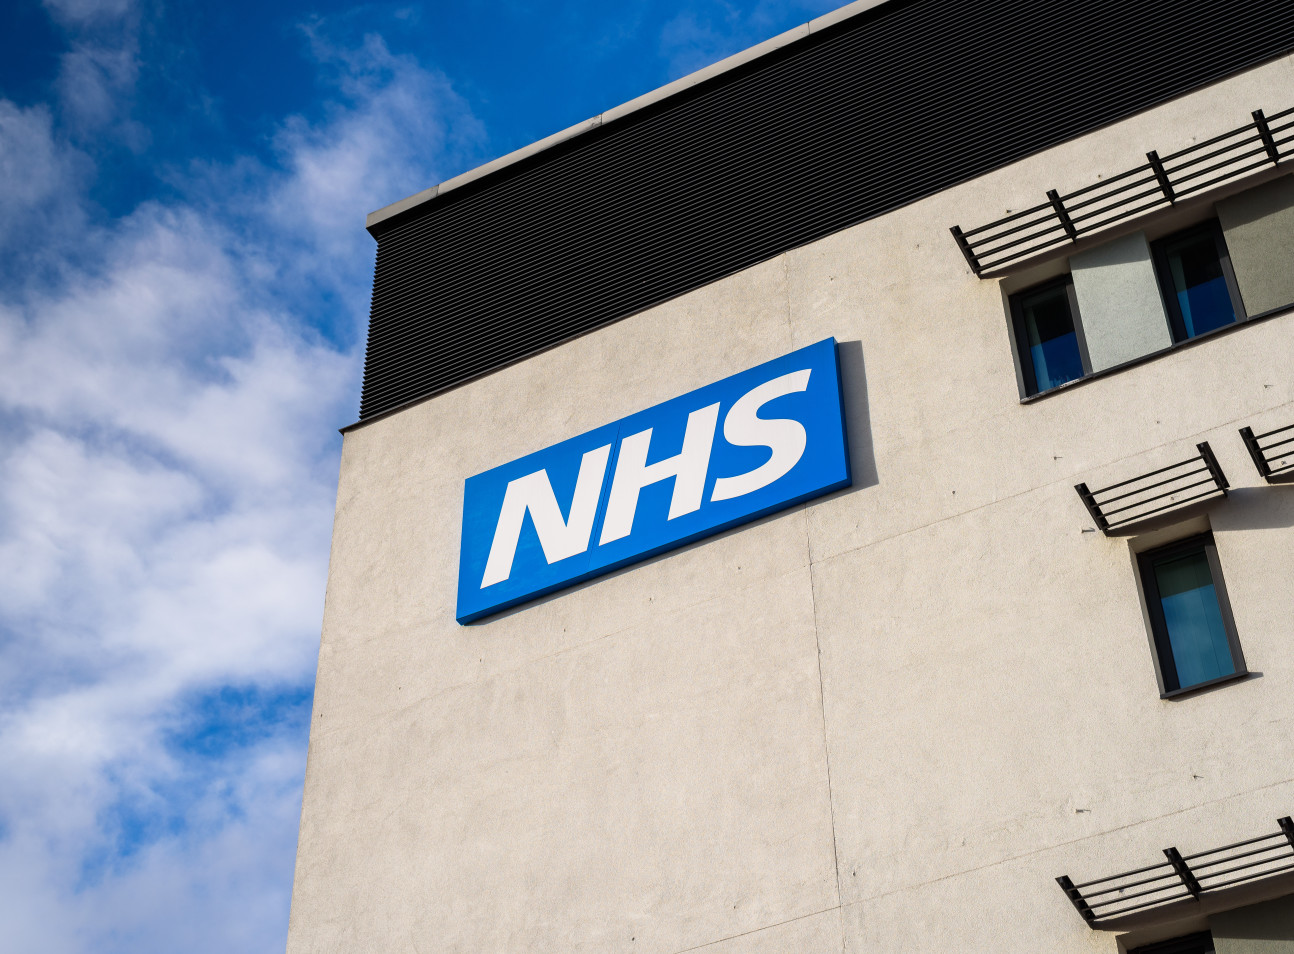 NHS logo on a hospital building